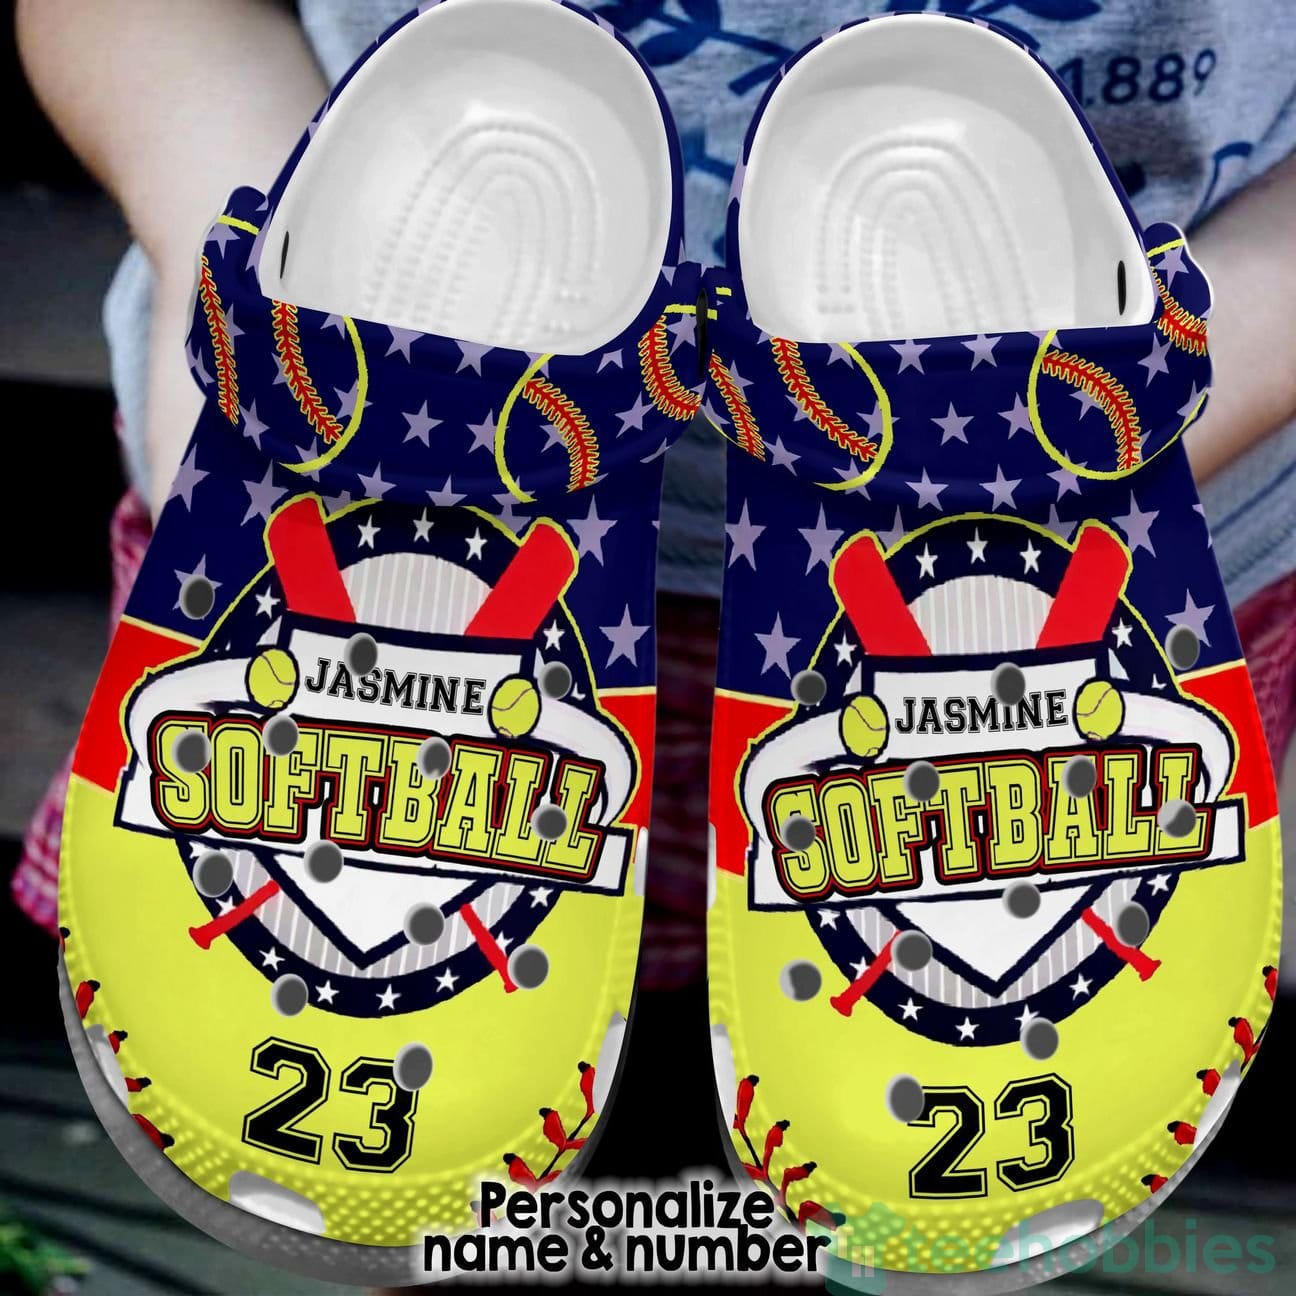 Personalized Name Softball Clog Shoes Starry Softball